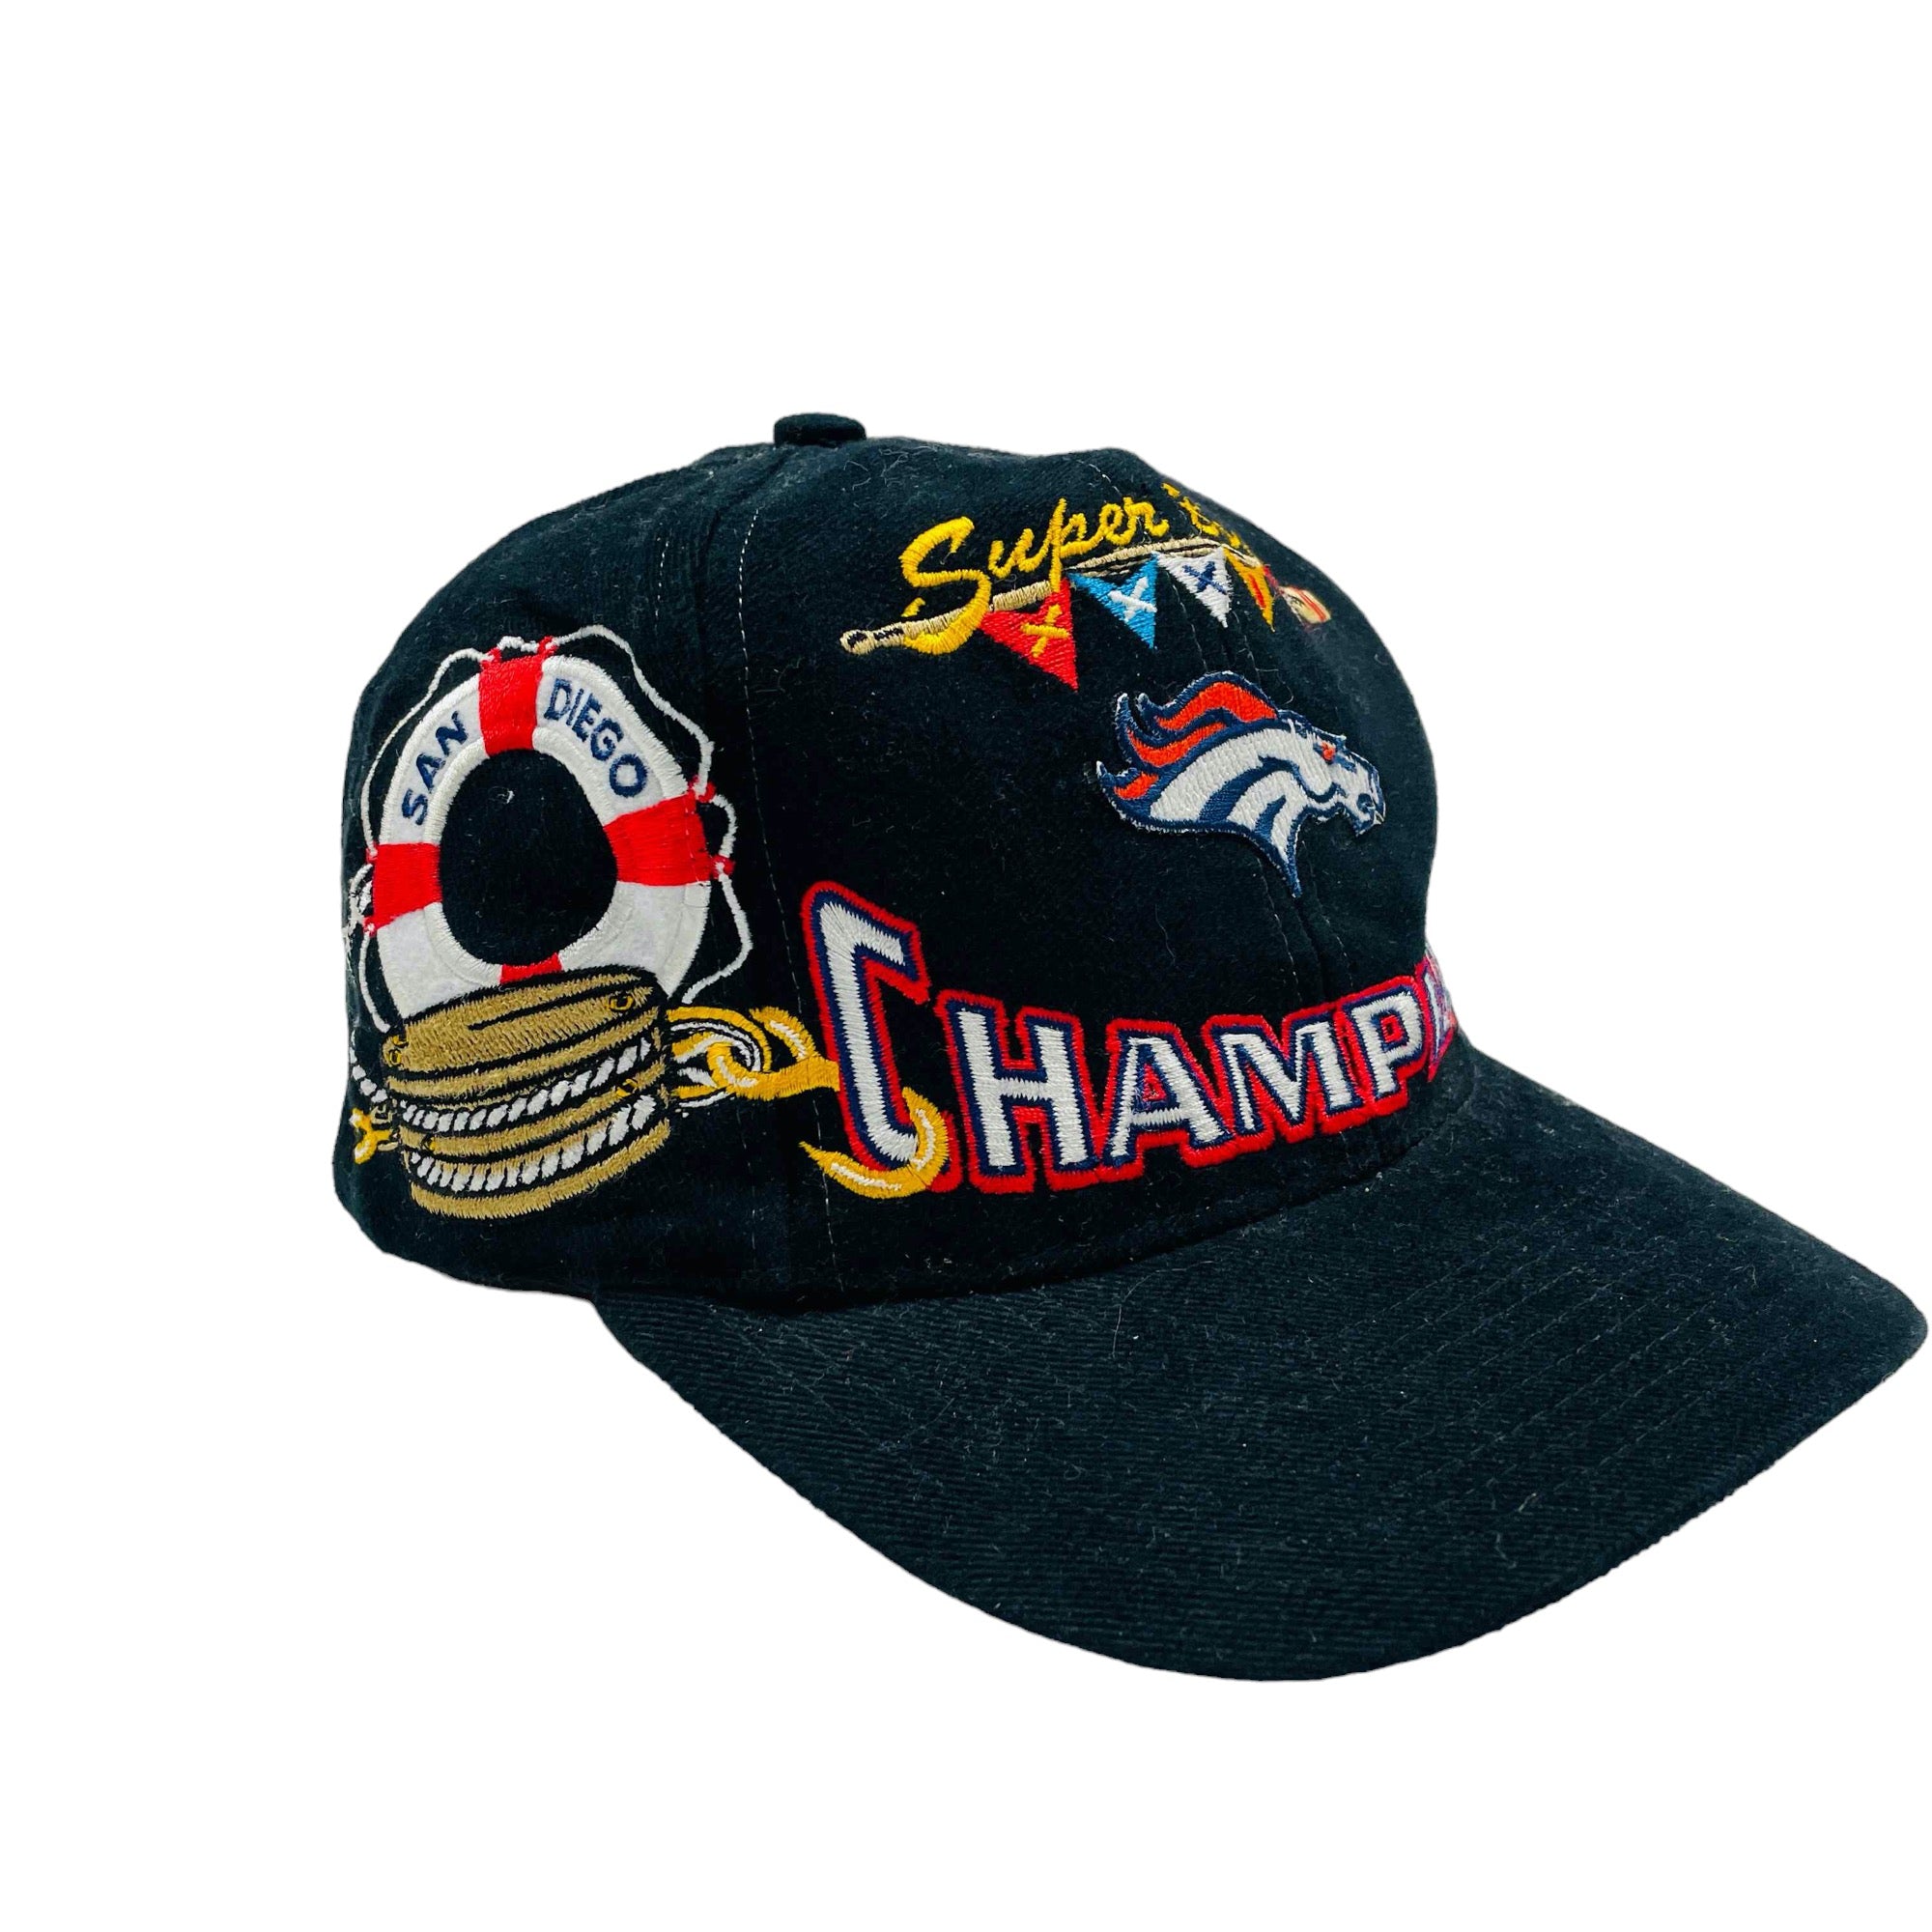 1998 Super Bowl XXXII San Diego Champions Snapback Cap